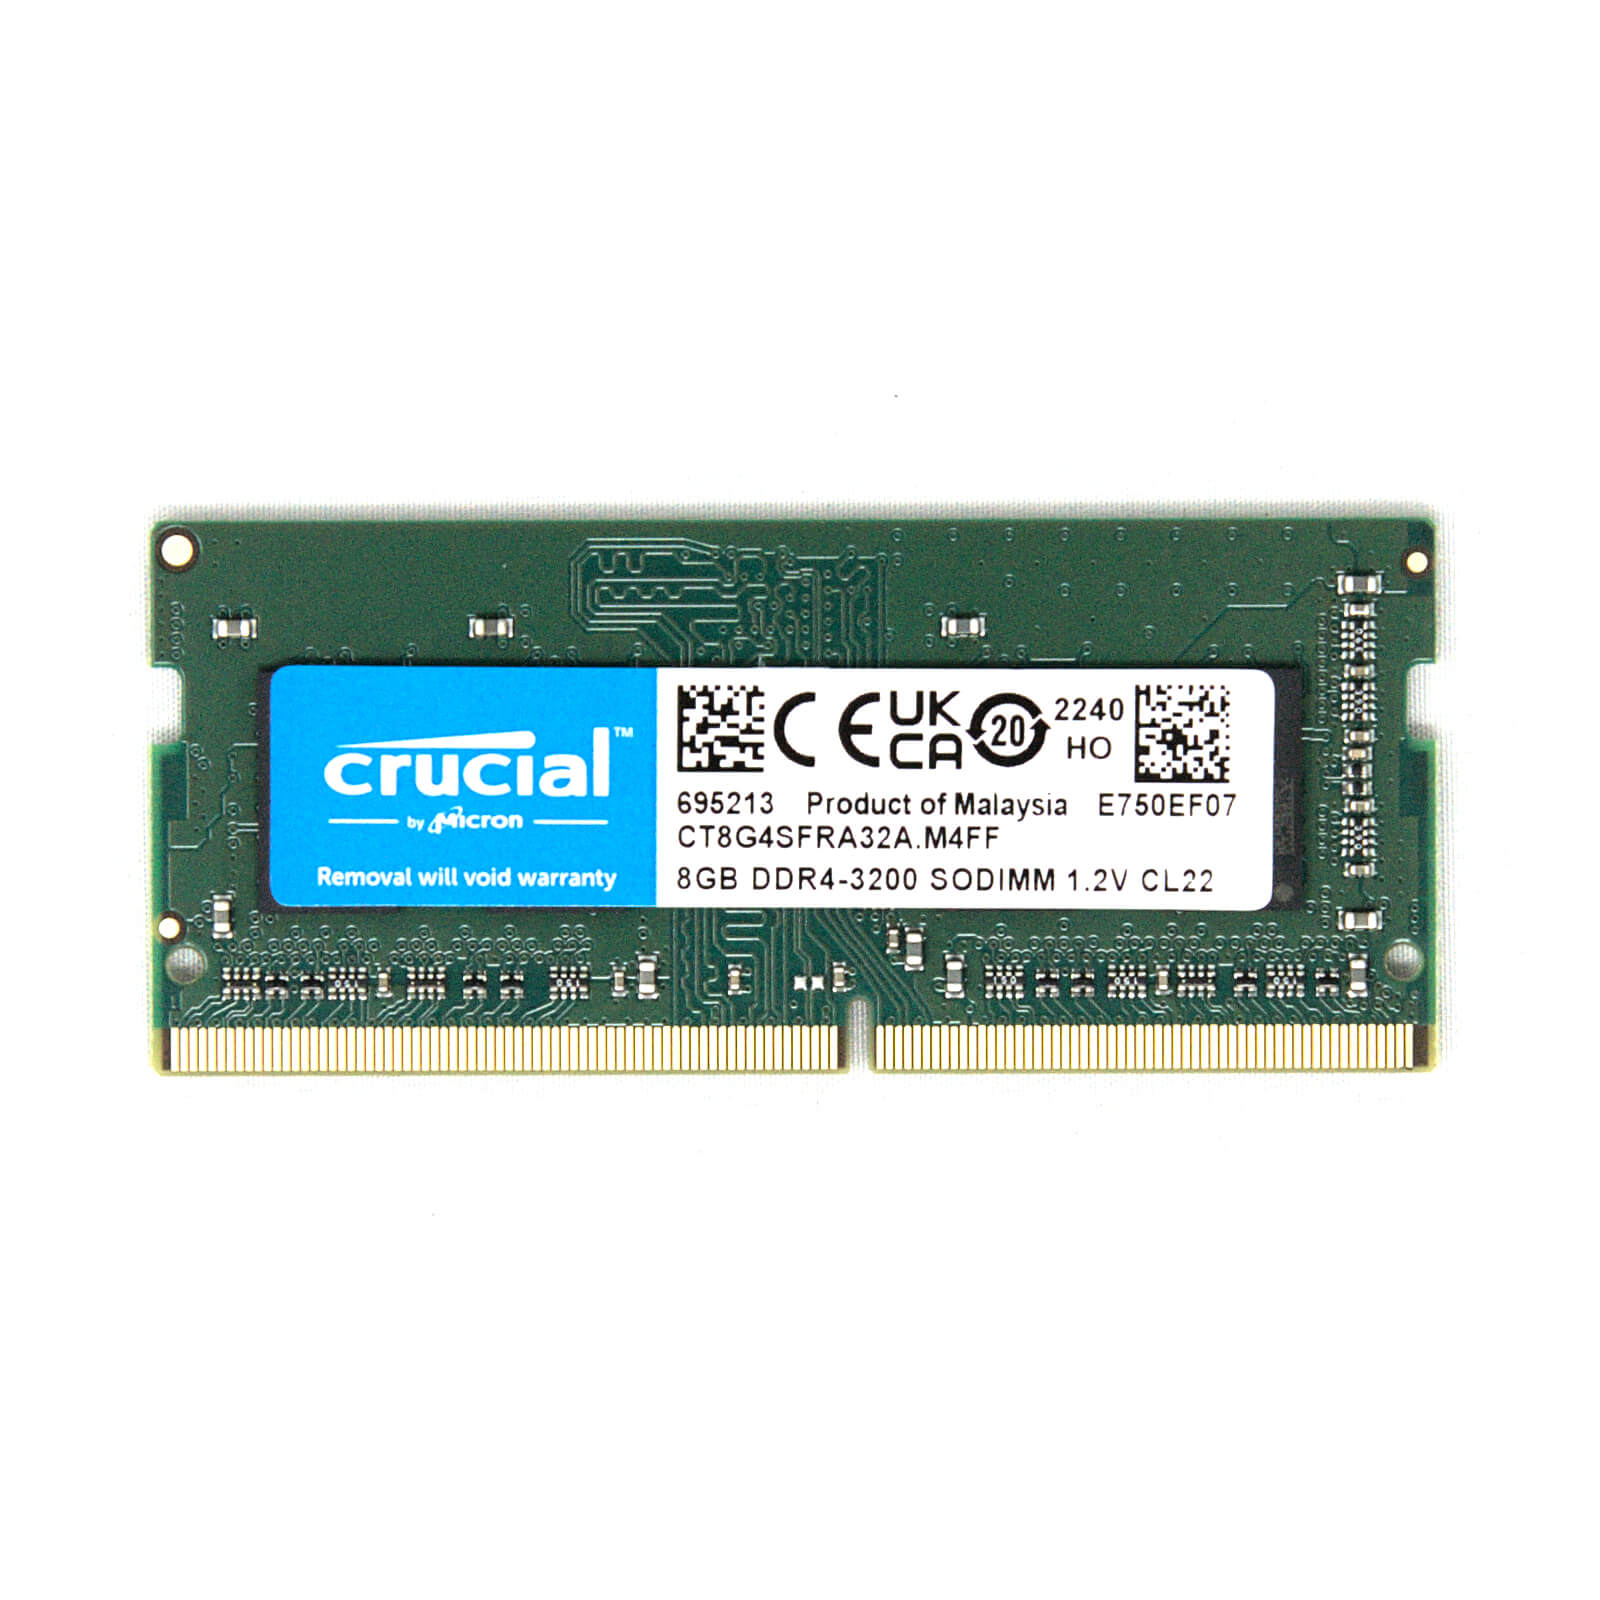 DDR4-3200 - SO-DIMM Crucial Module Memory Protectli - 8GB